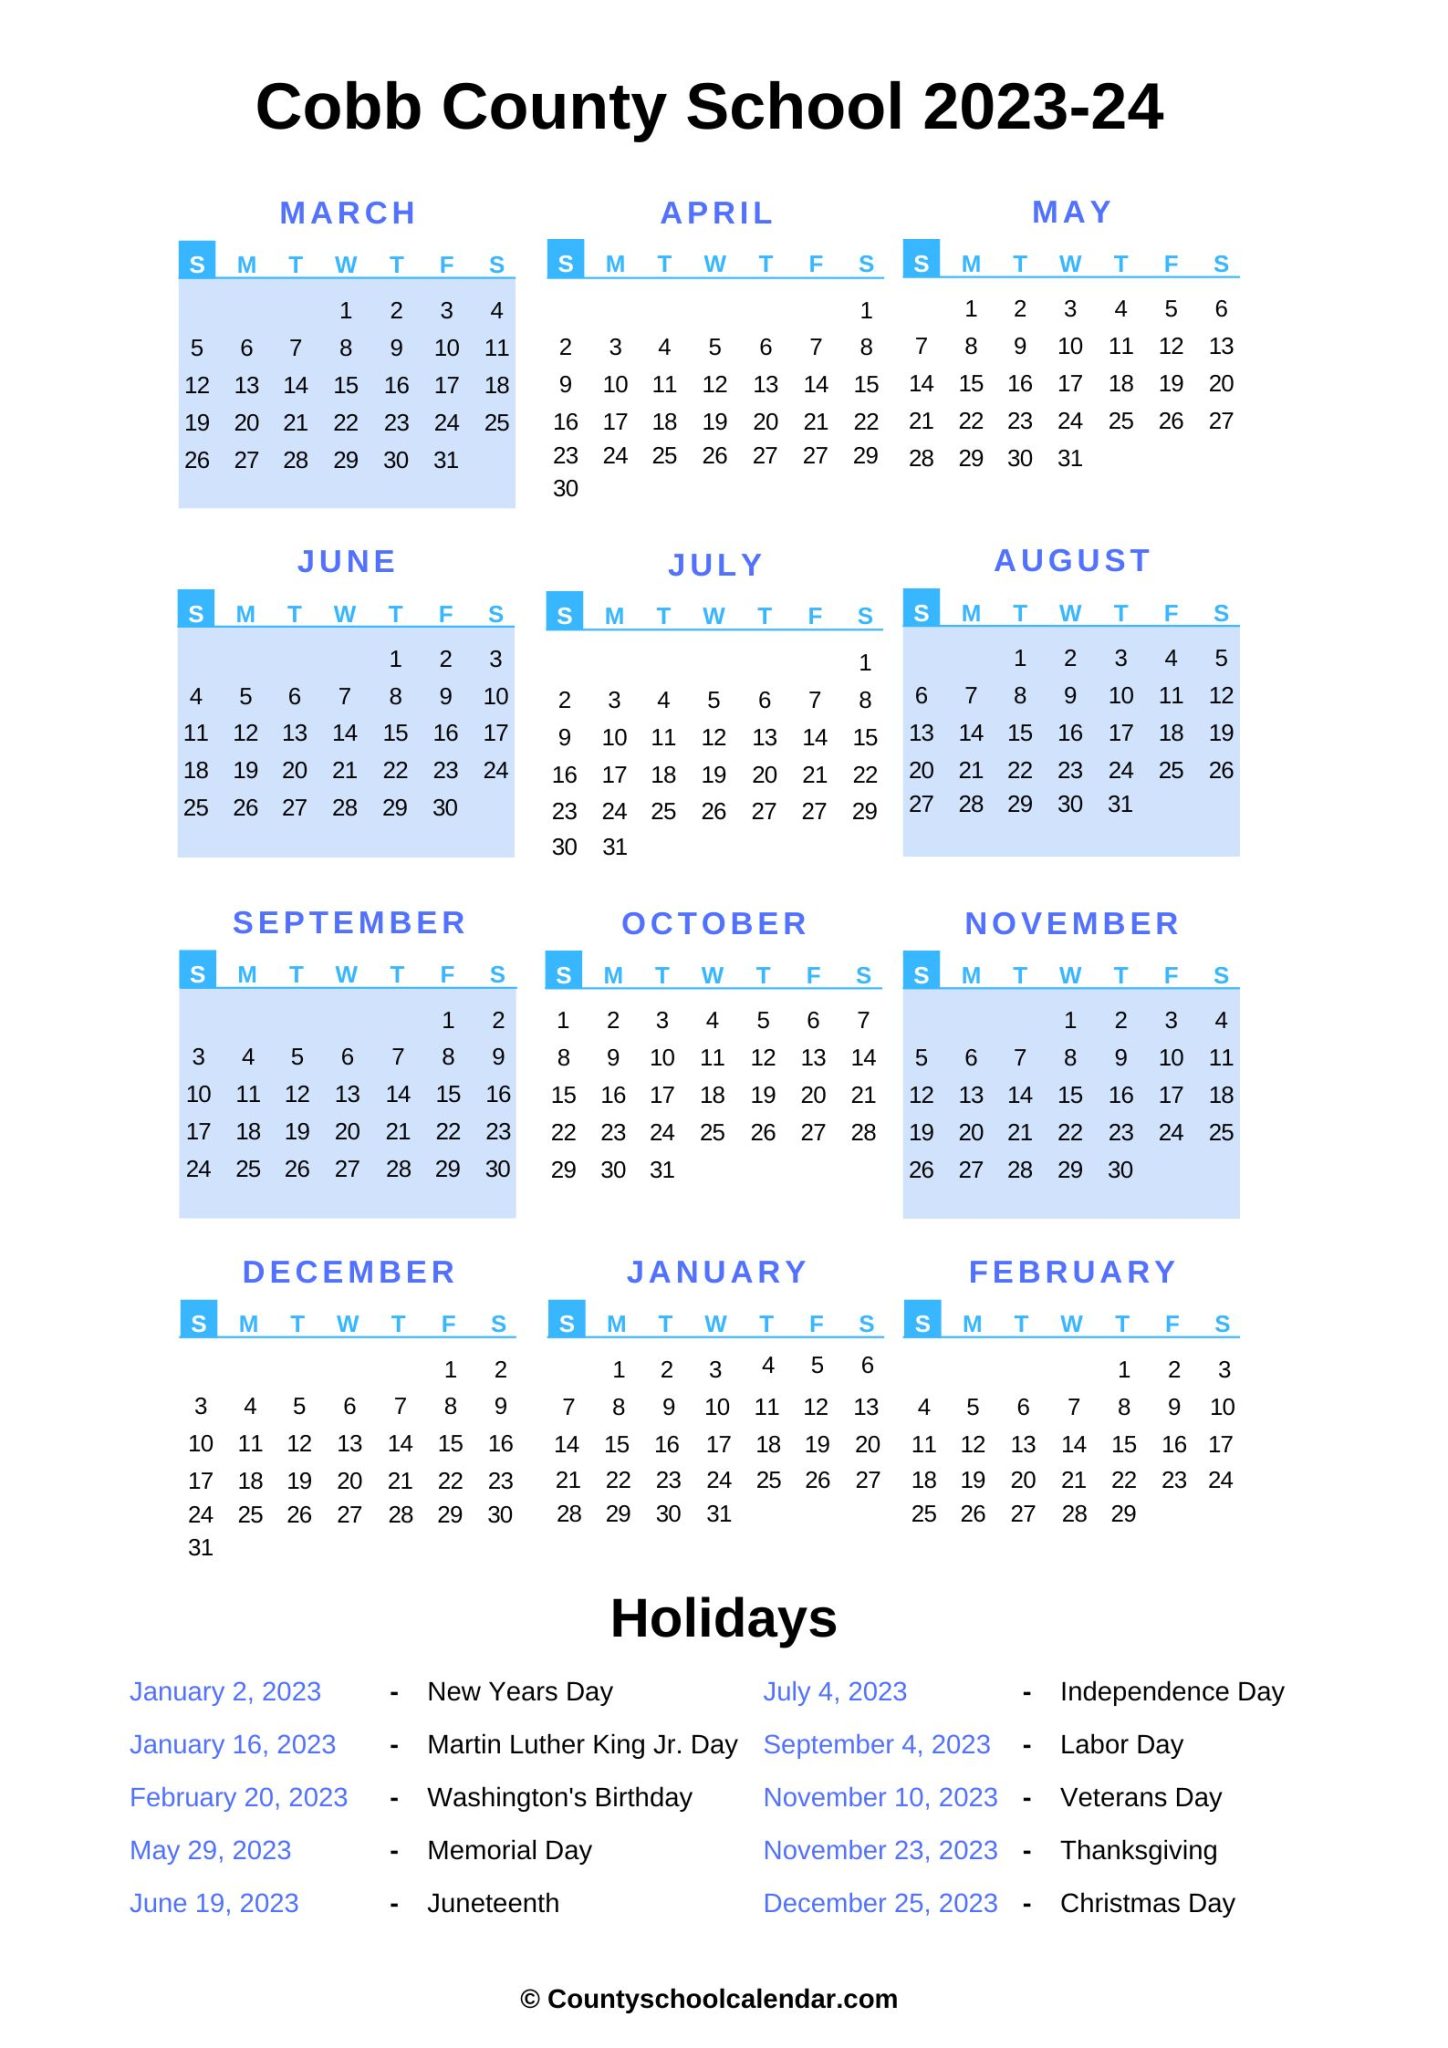 cobb-county-school-calendar-2022-archives-county-school-calendar-2023-24